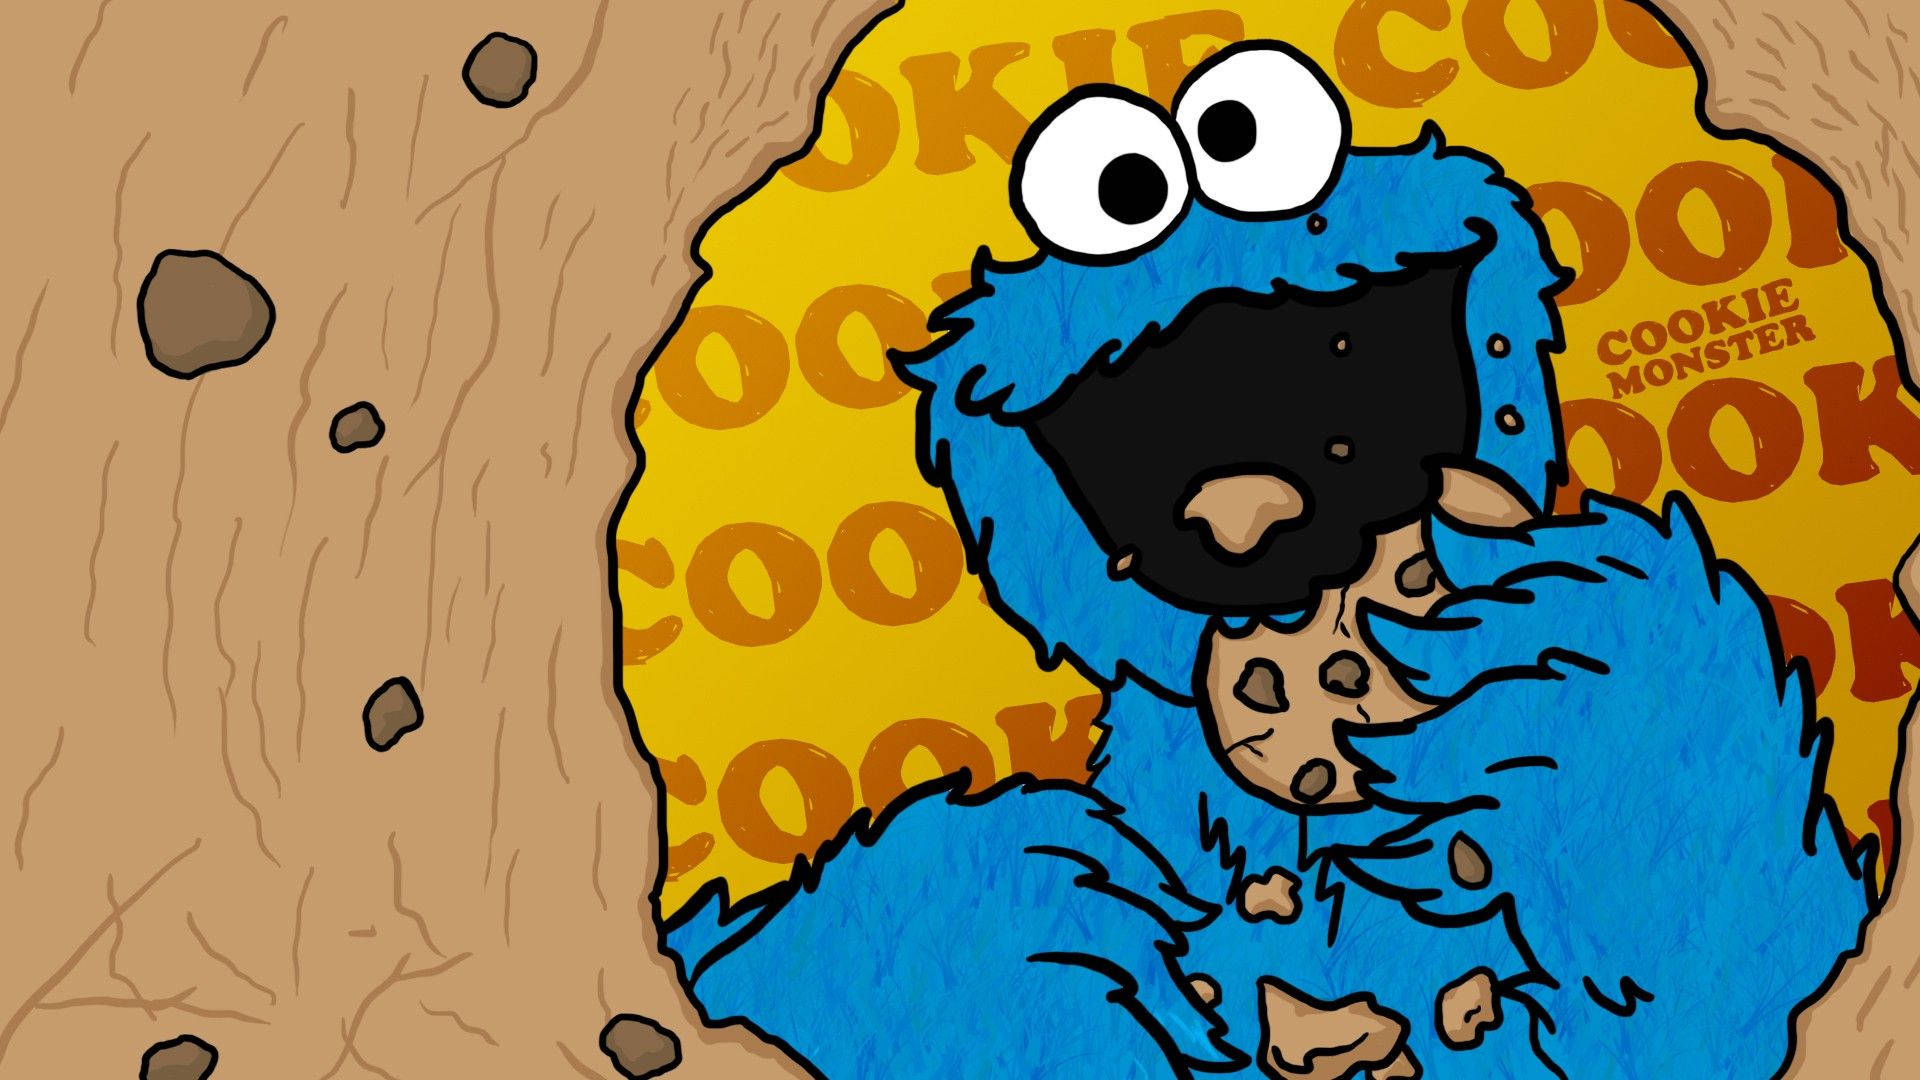 Cartoon Illustration Cookie Monster Background